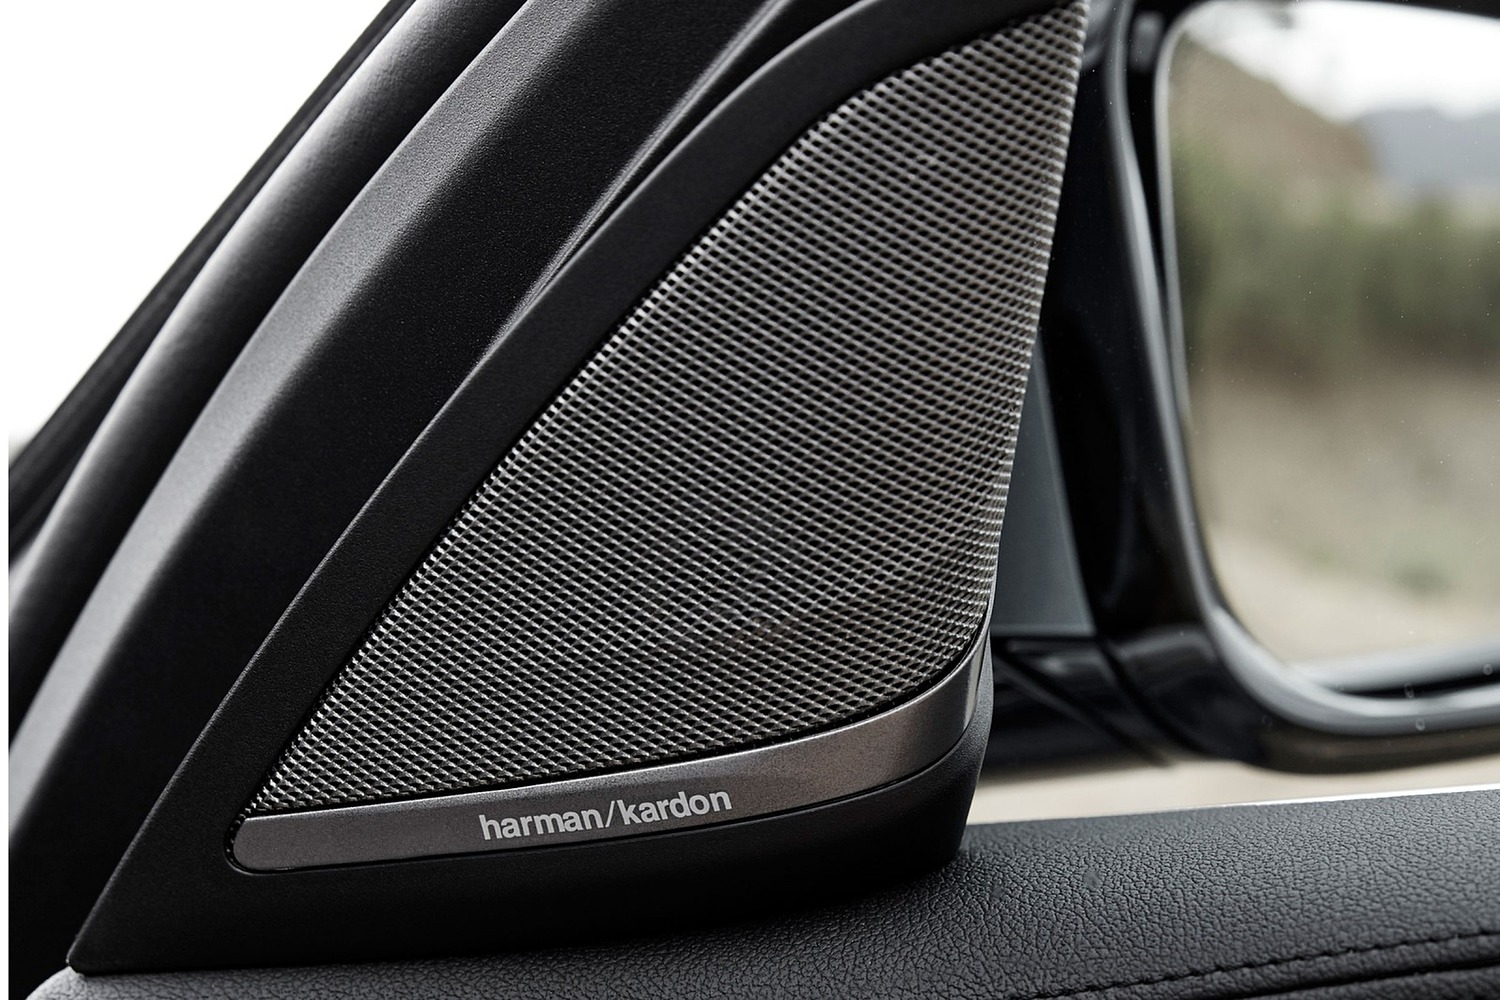 BMW 5 Series 540i Sedan Interior Detail. Options Shown. (2017 model year shown)